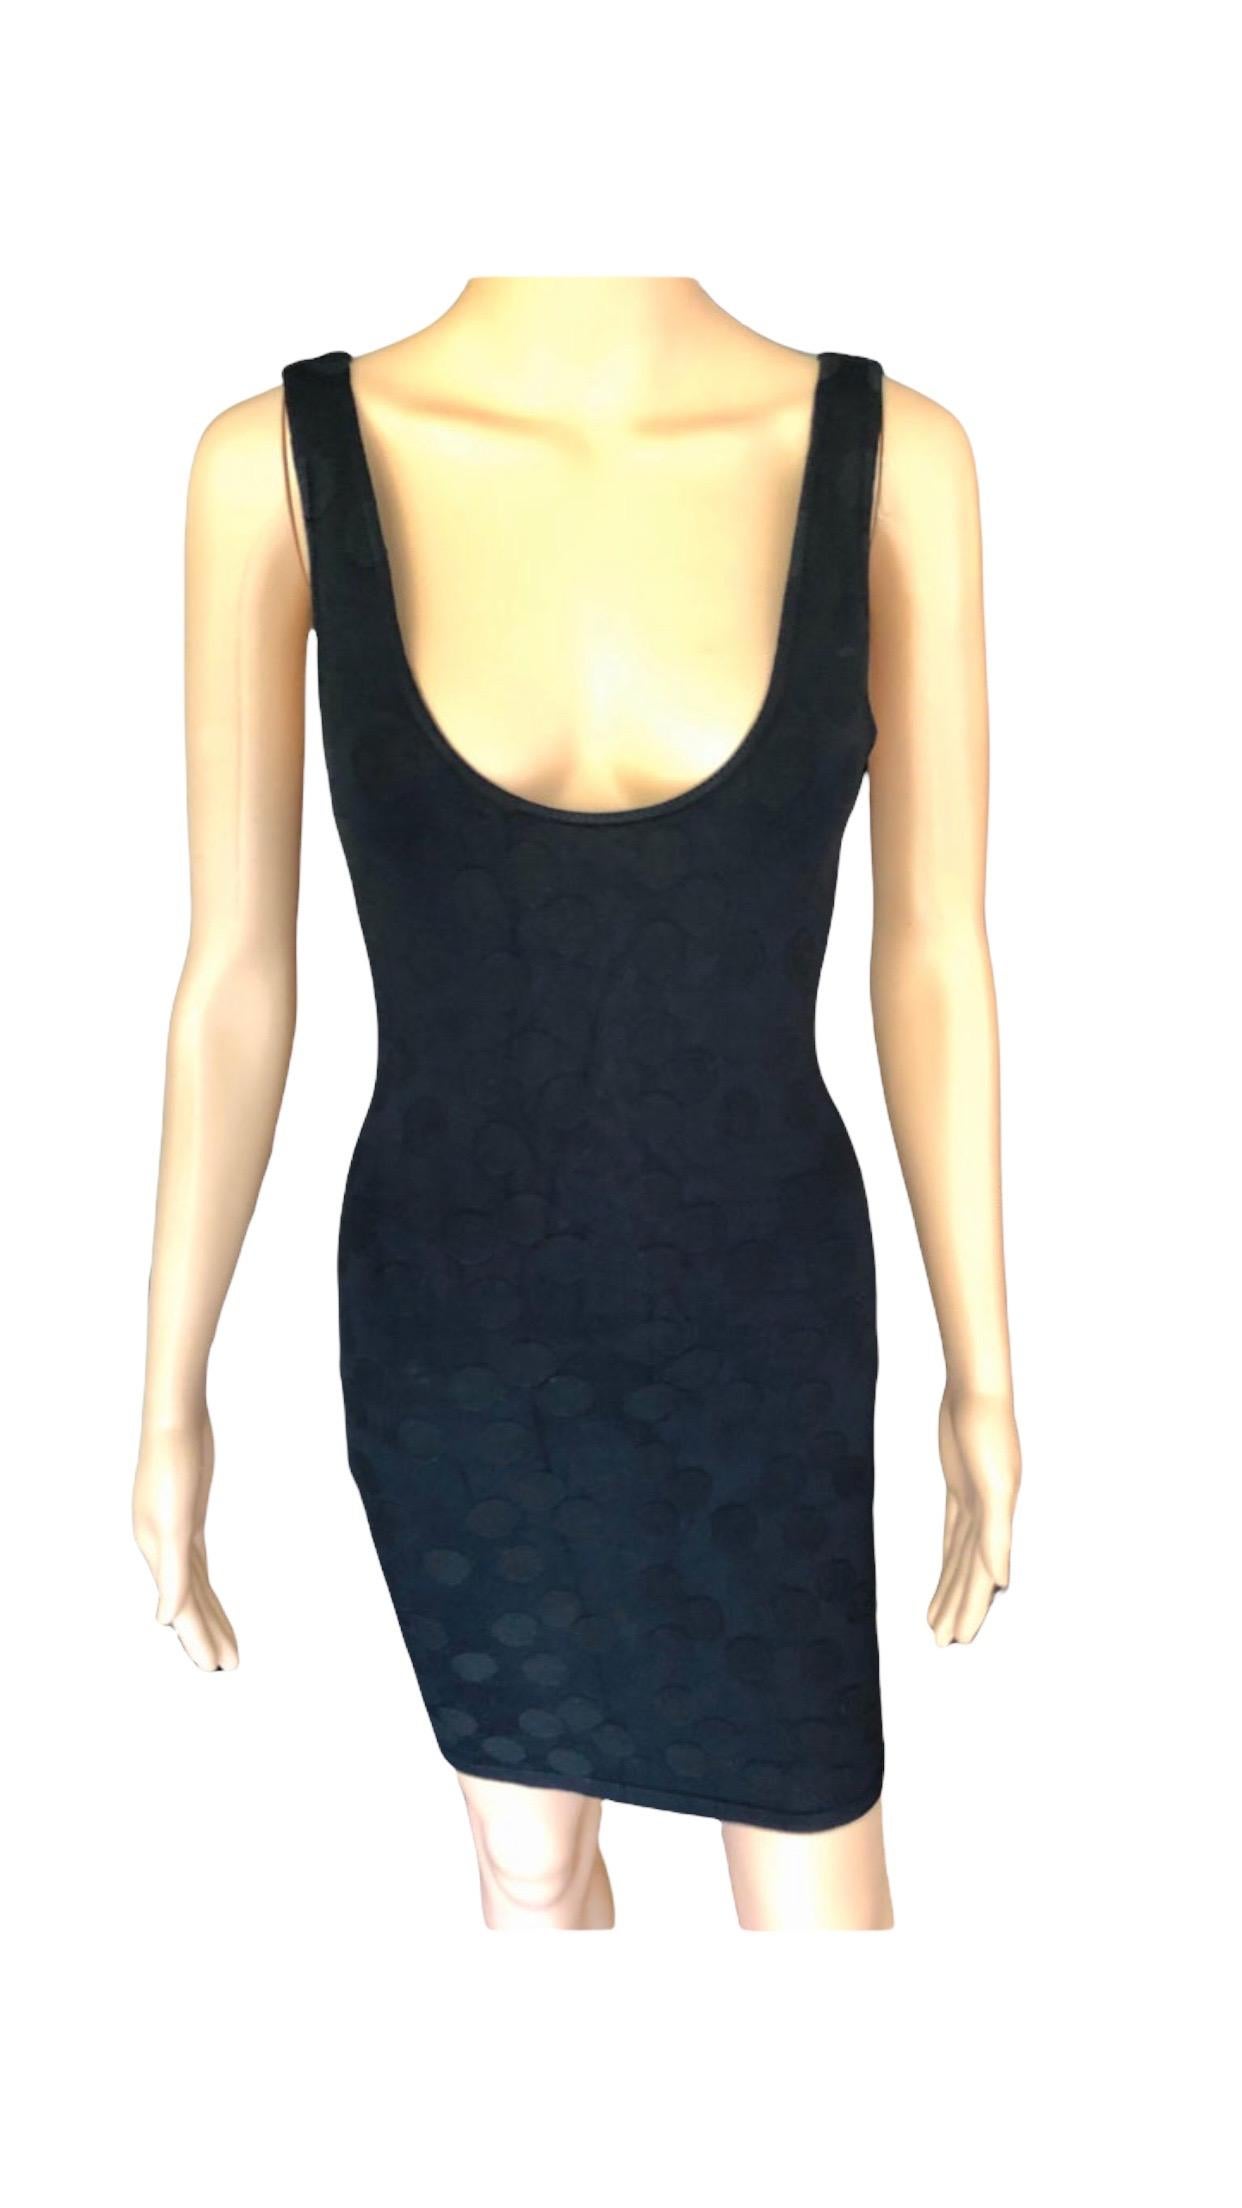 Azzedine Alaia S/S 1991 Vintage Bodycon Open Back Polka Dot Black Mini Dress For Sale 1